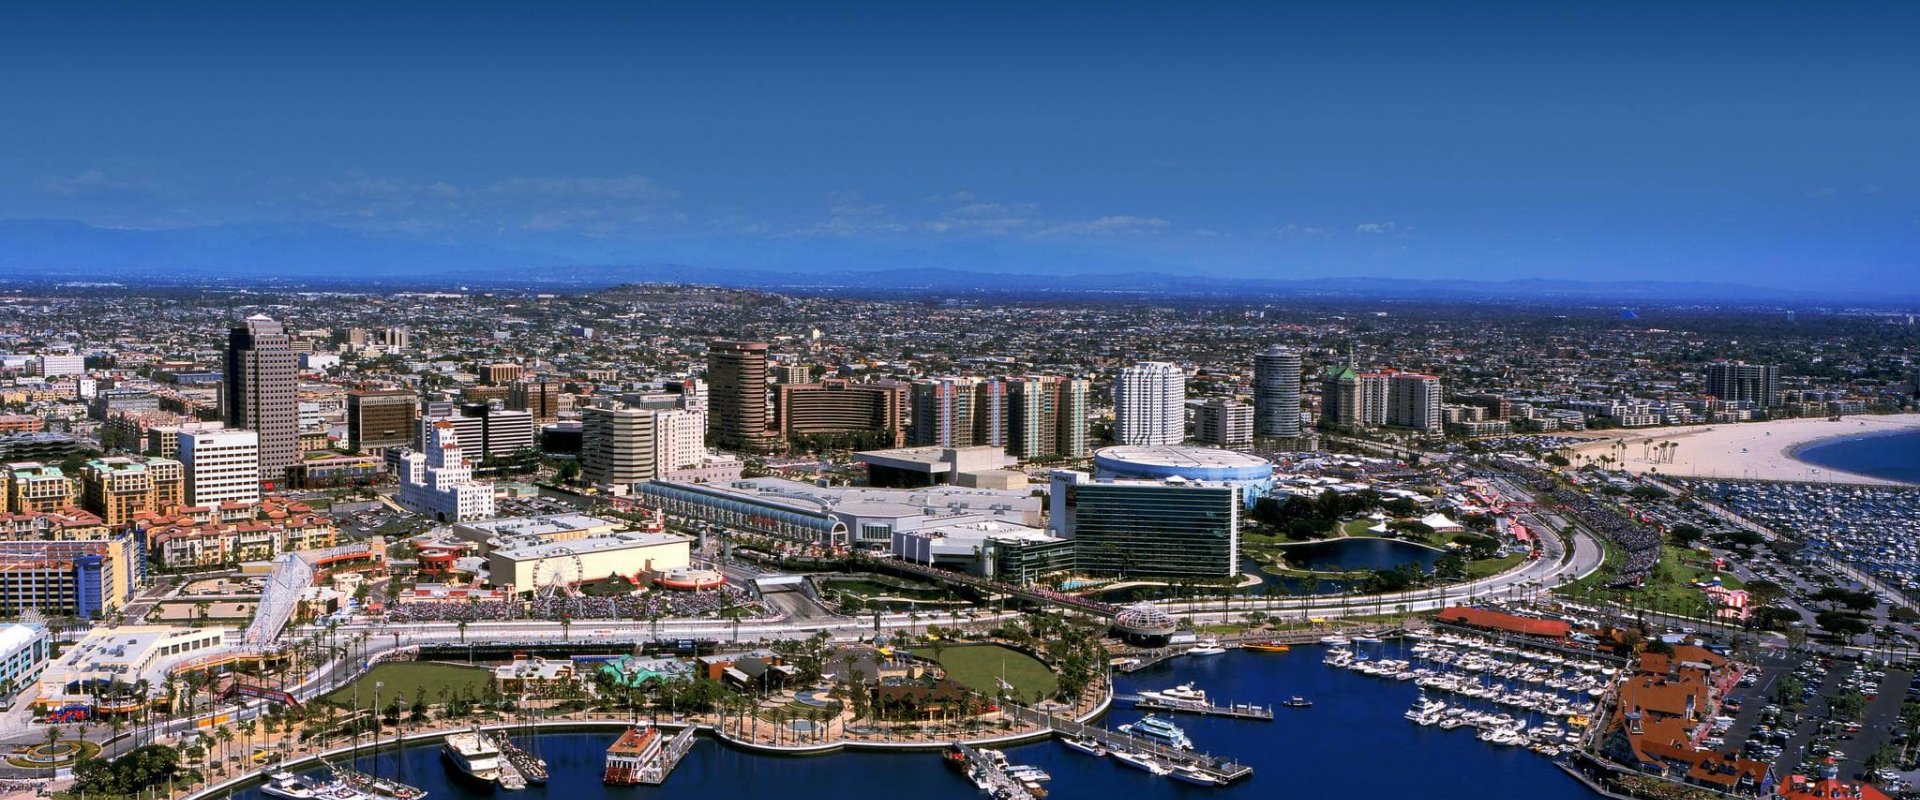 Photo: Aerial view of Long Beach